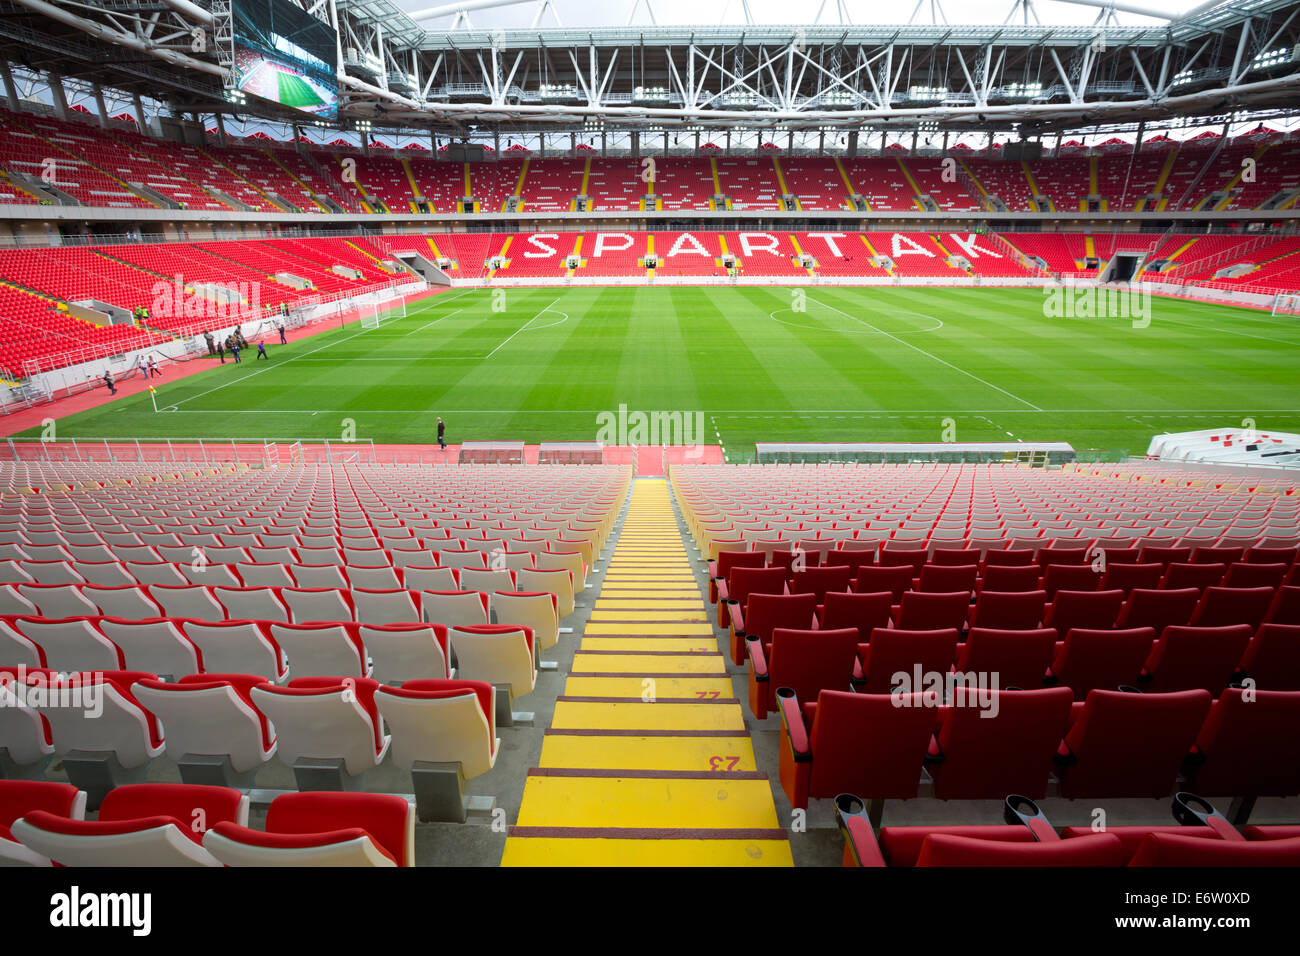 File:Spartak stadium (Otkrytiye Arena), 23 August 2014.JPG - Wikipedia